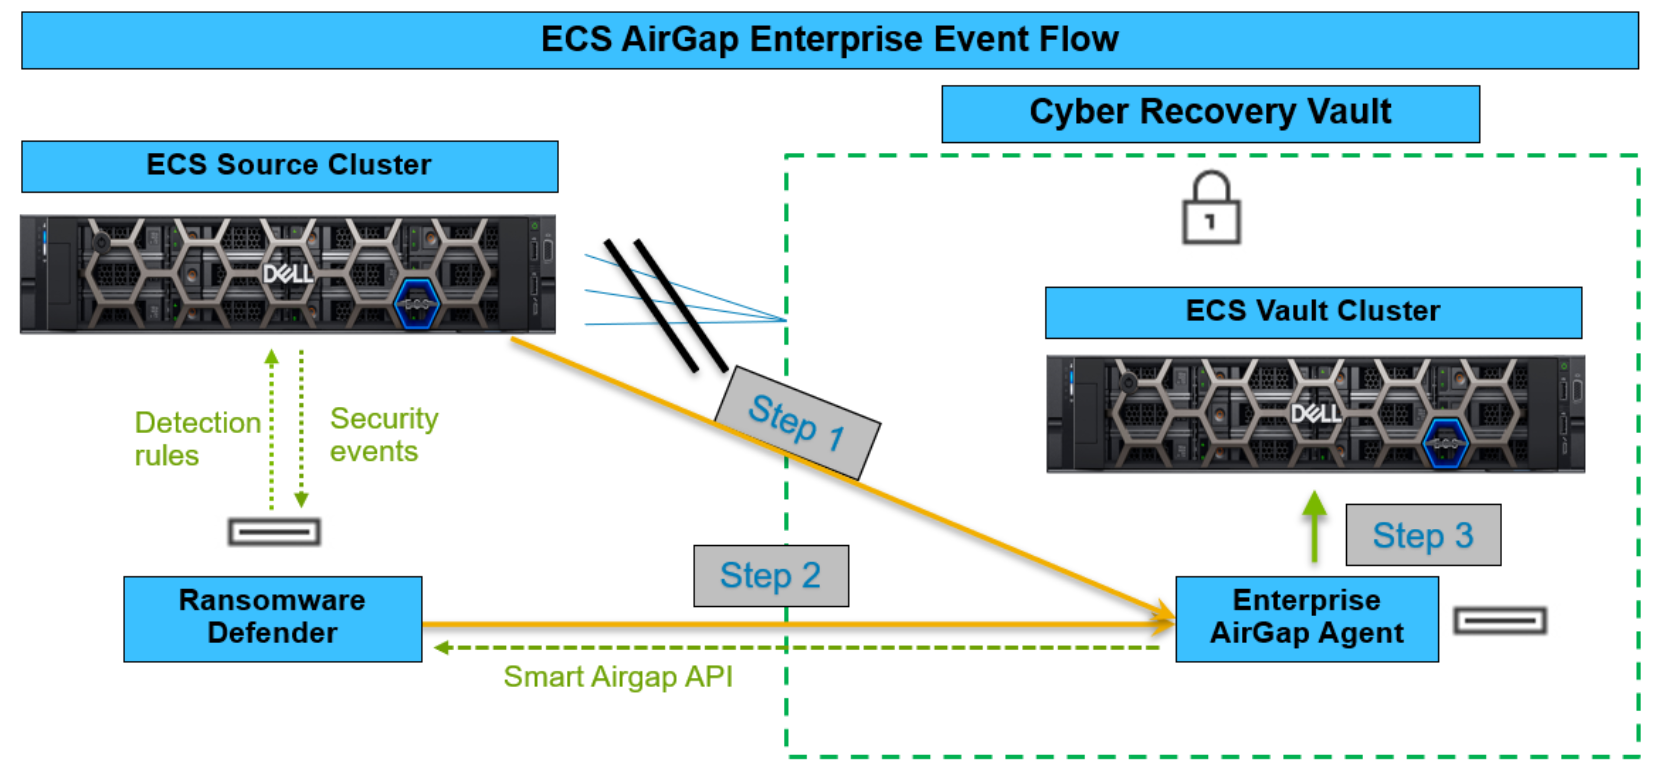 This shows a workflow about AirGap Enterprise Events.